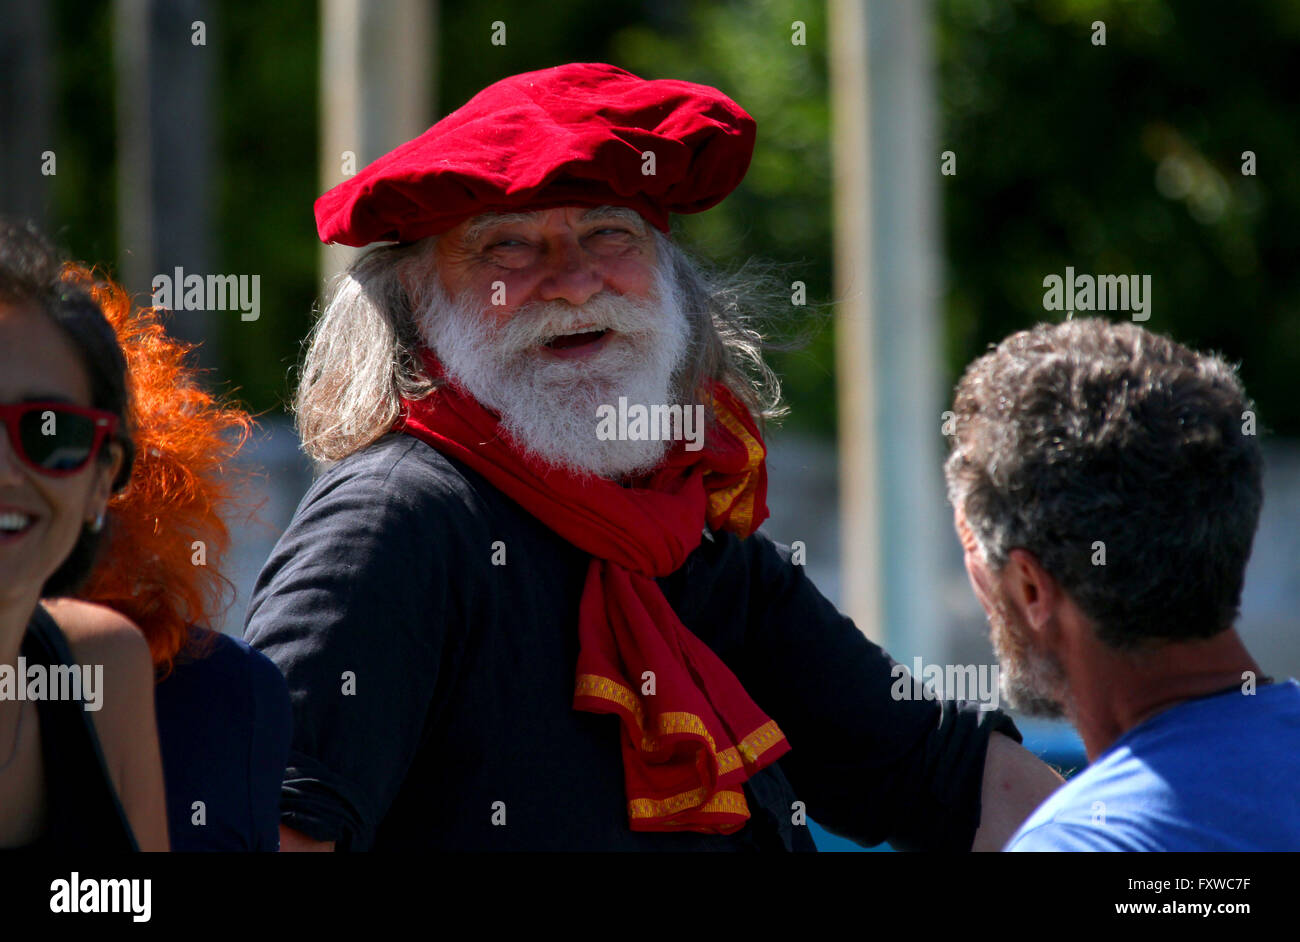 Mann mit rotem Hut & grauen Bart Venedig VENEZIA Italien 1. August 2014 Stockfoto